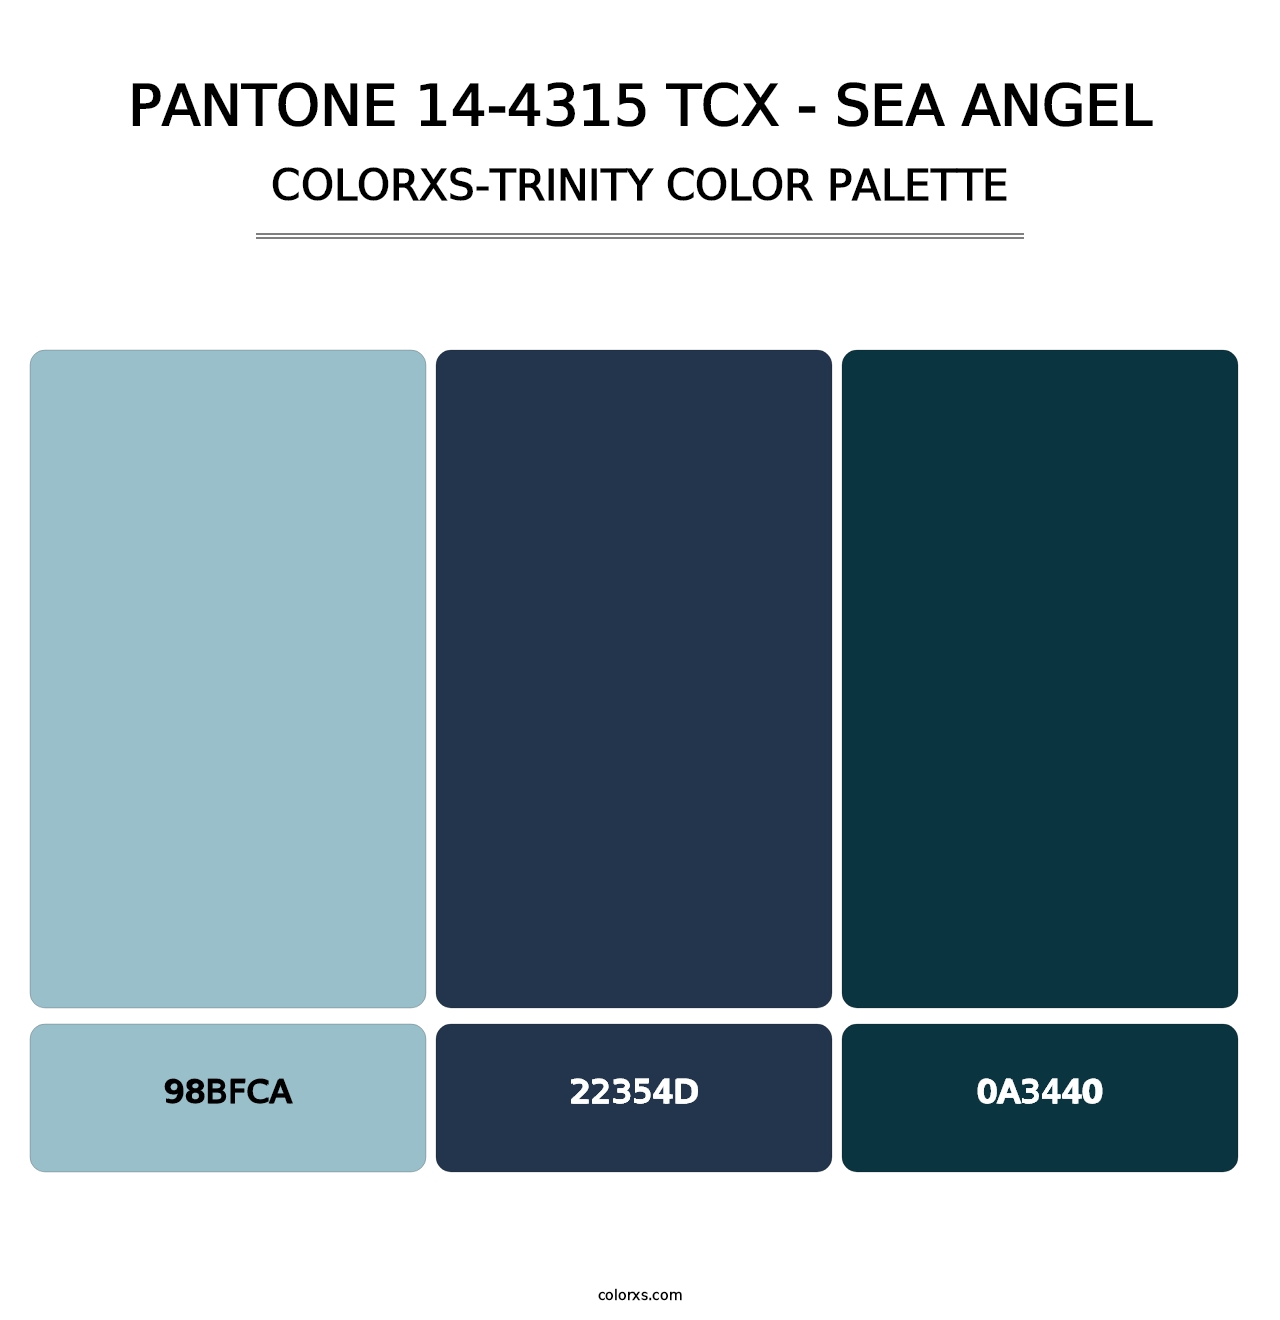 PANTONE 14-4315 TCX - Sea Angel - Colorxs Trinity Palette